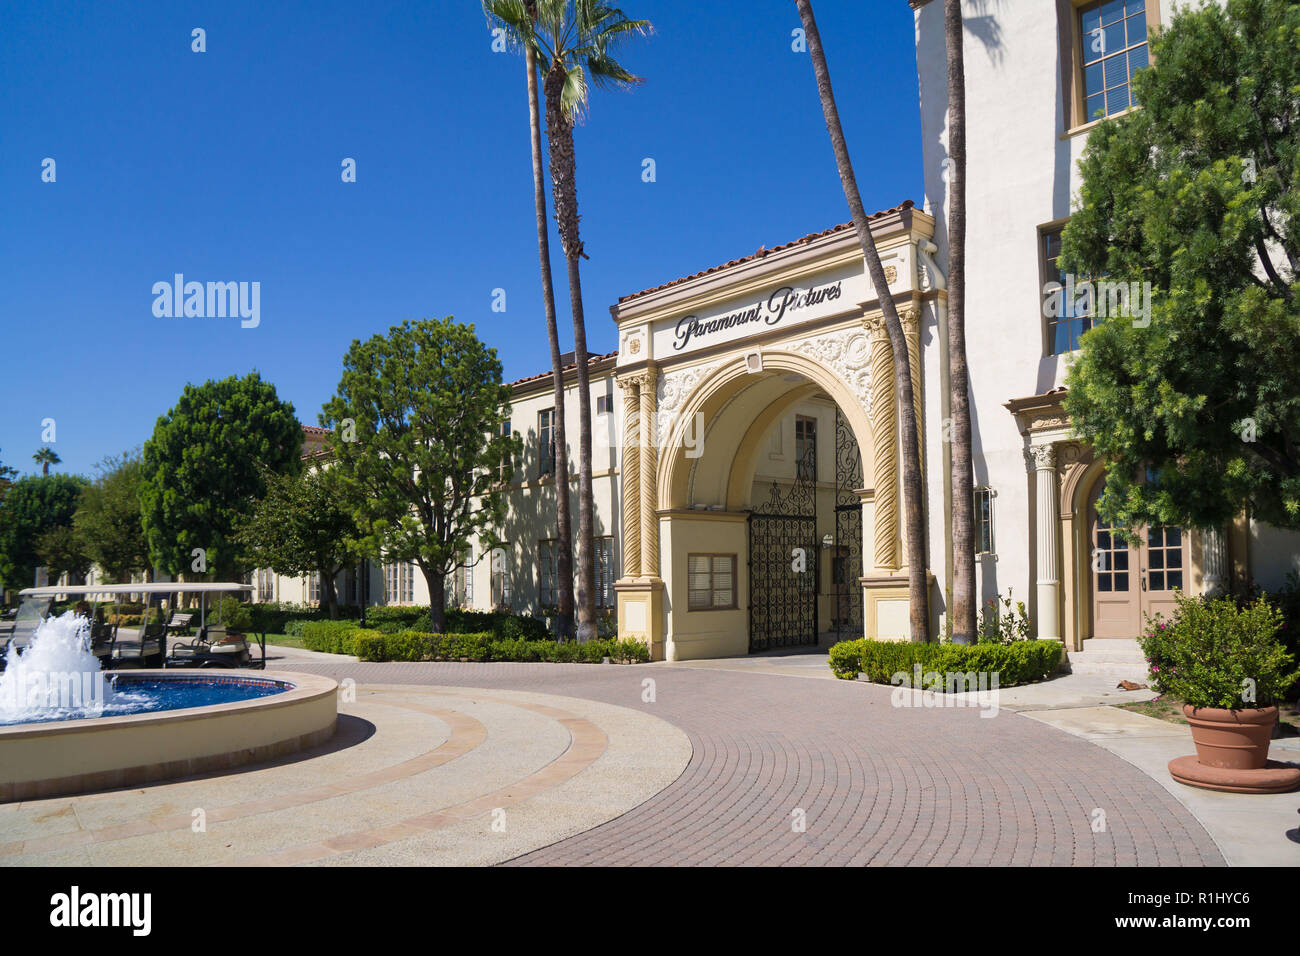 Paramount Studios in Hollywood, USA Stock Photo